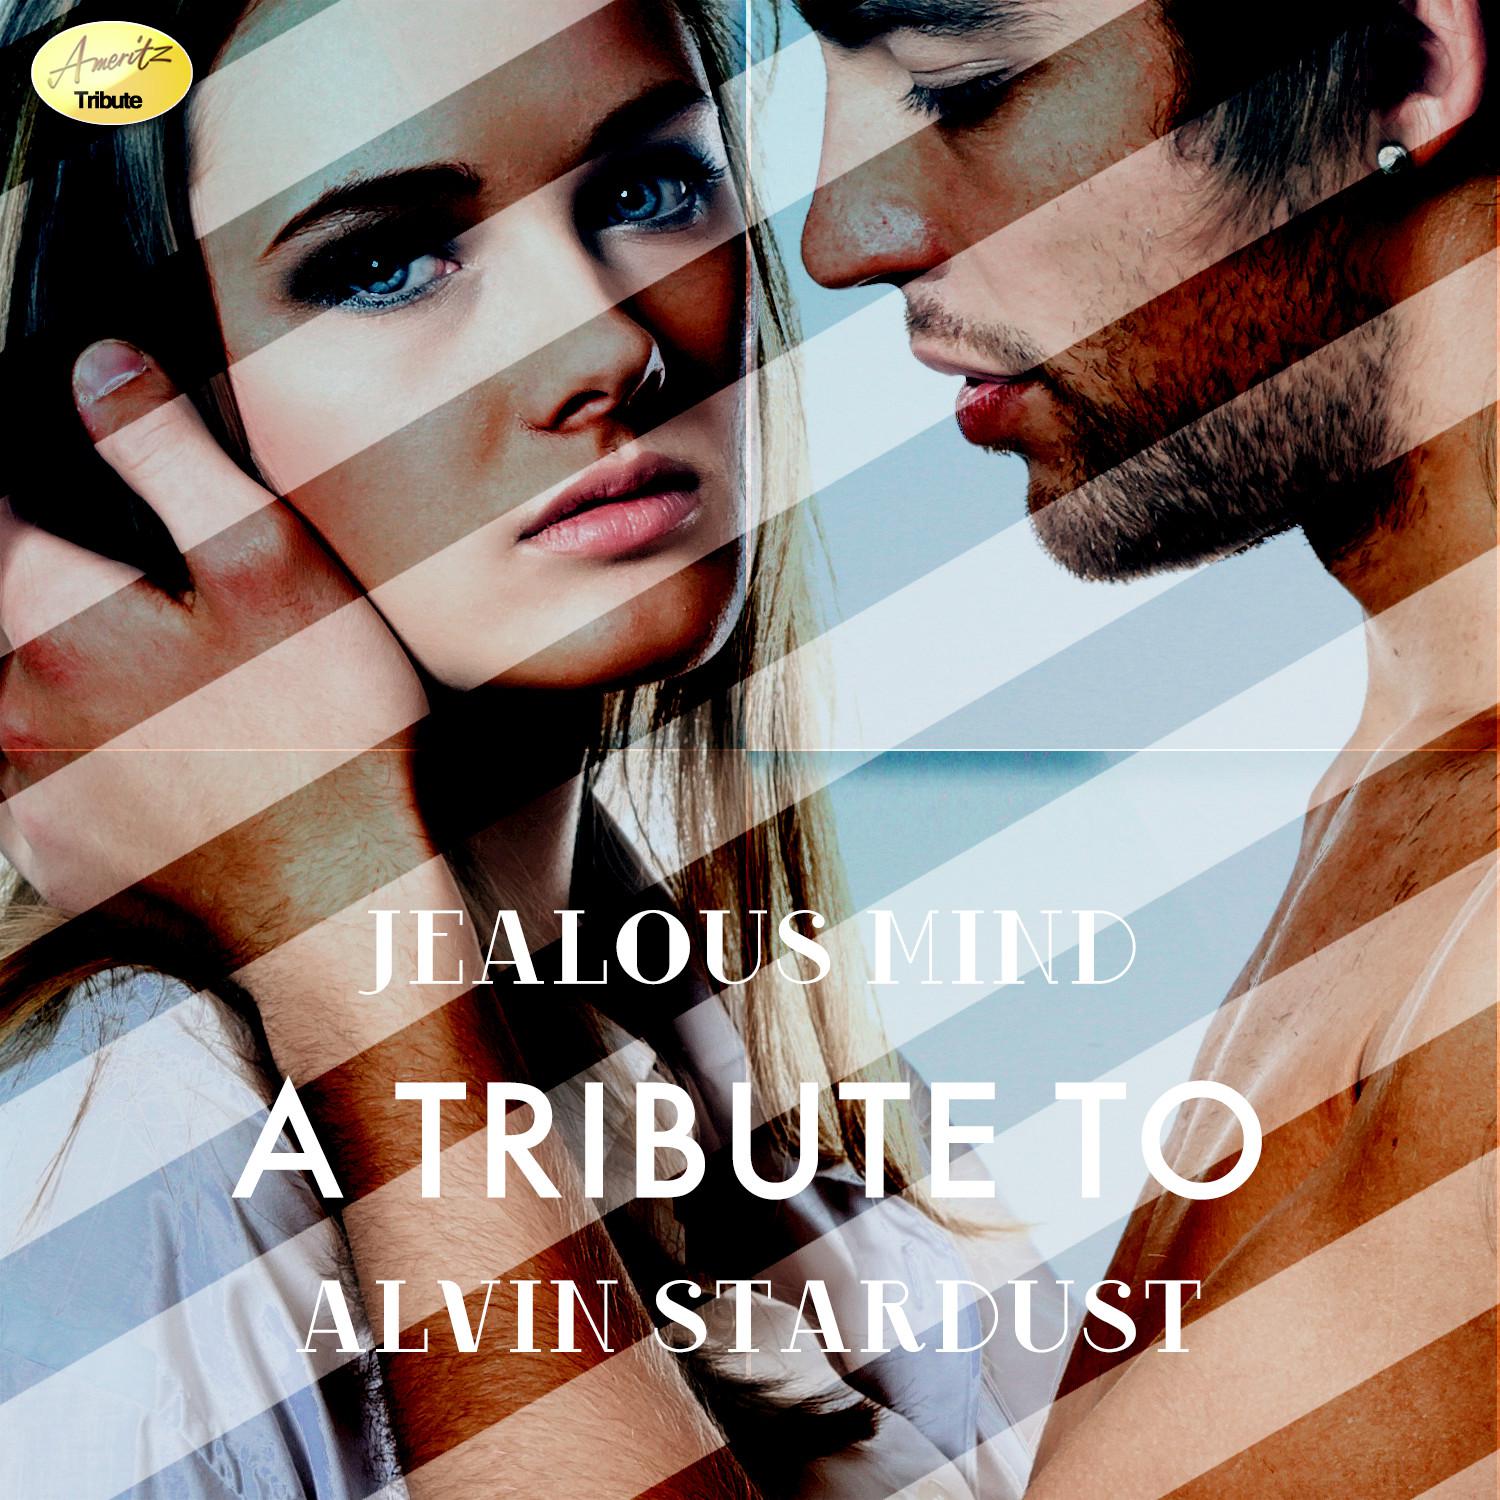 Jealous Mind - A Tribute to Alvin Stardust